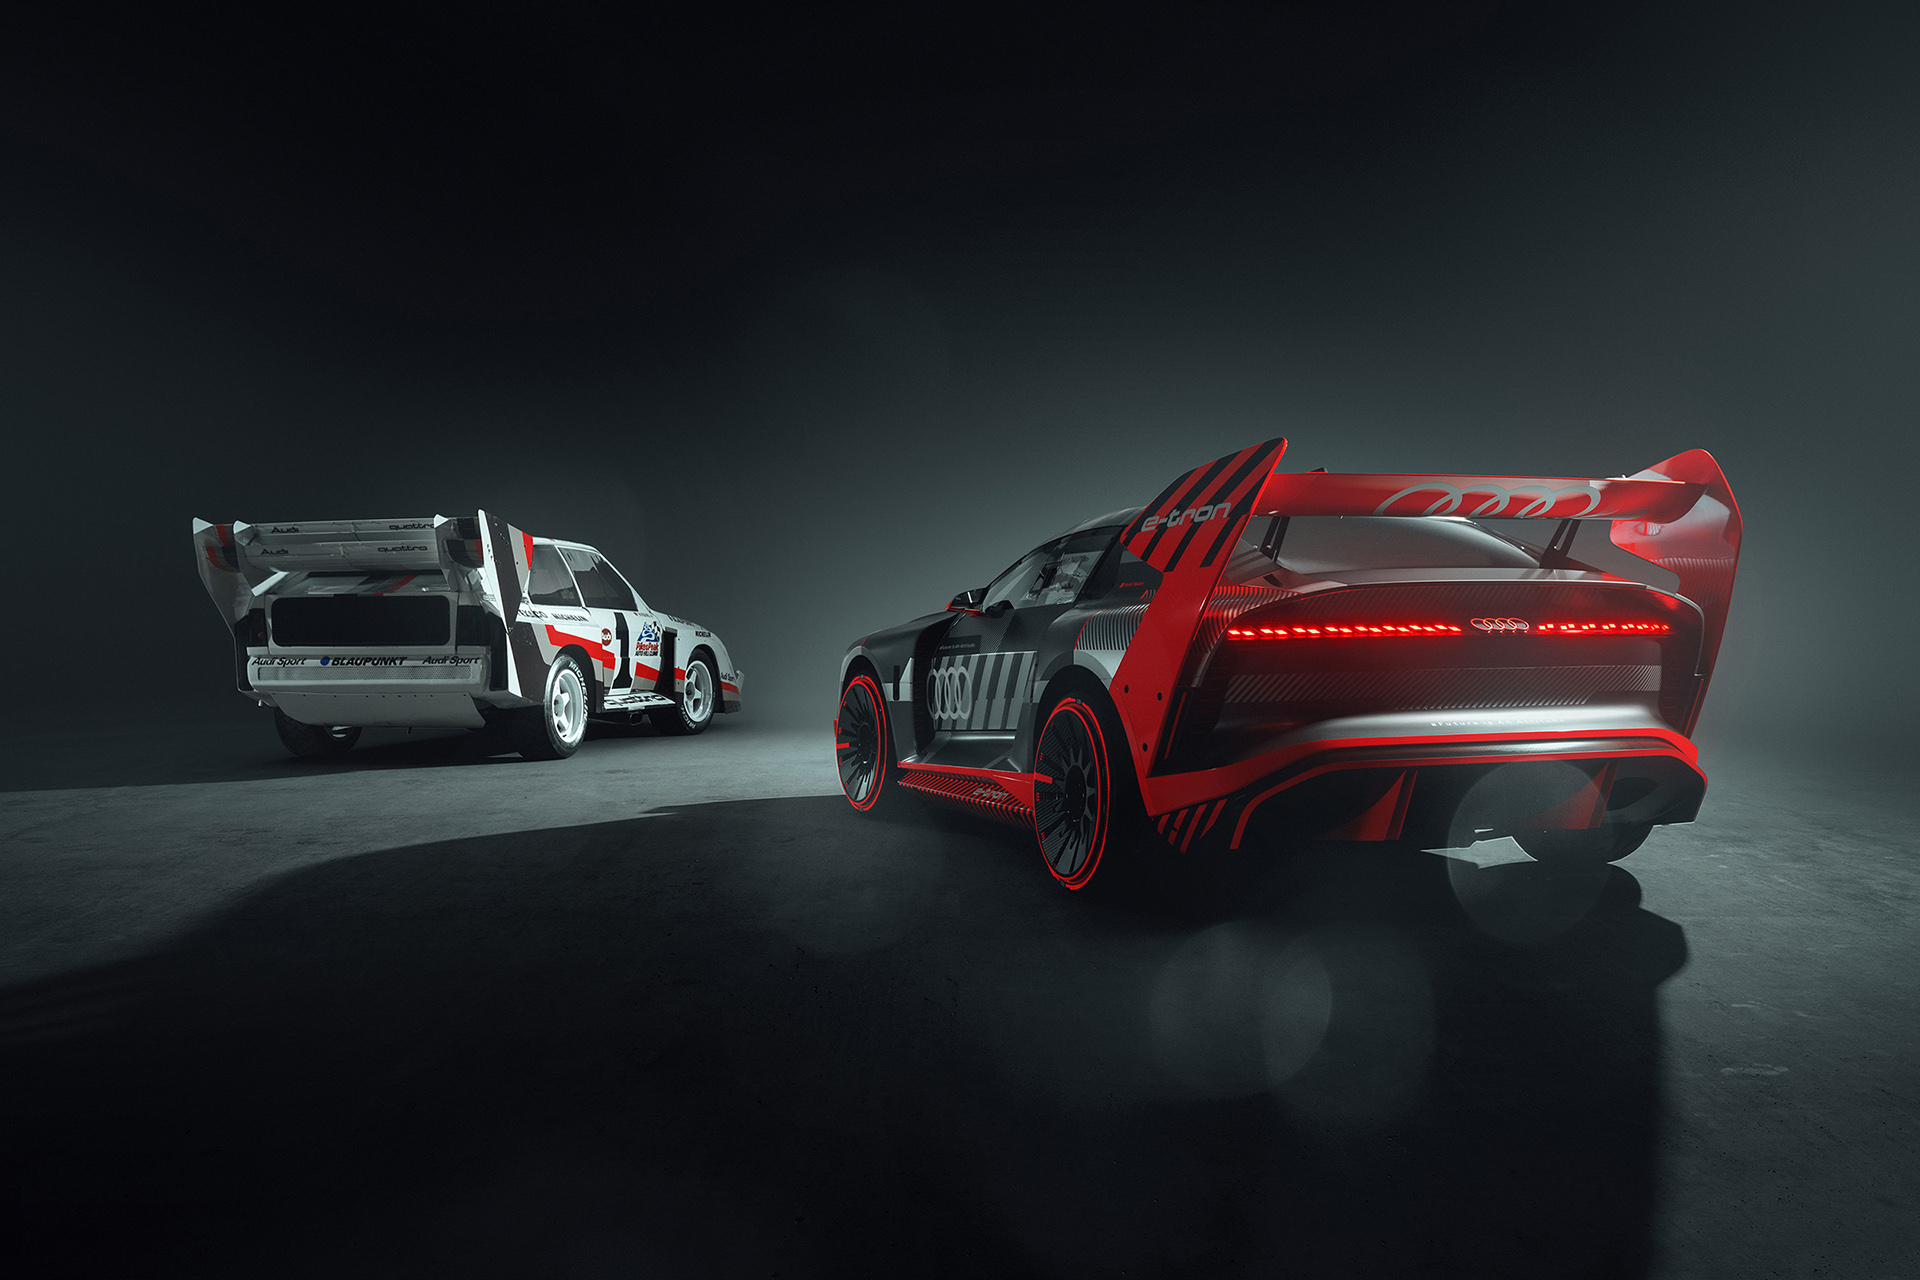 Audi S1 E-Tron